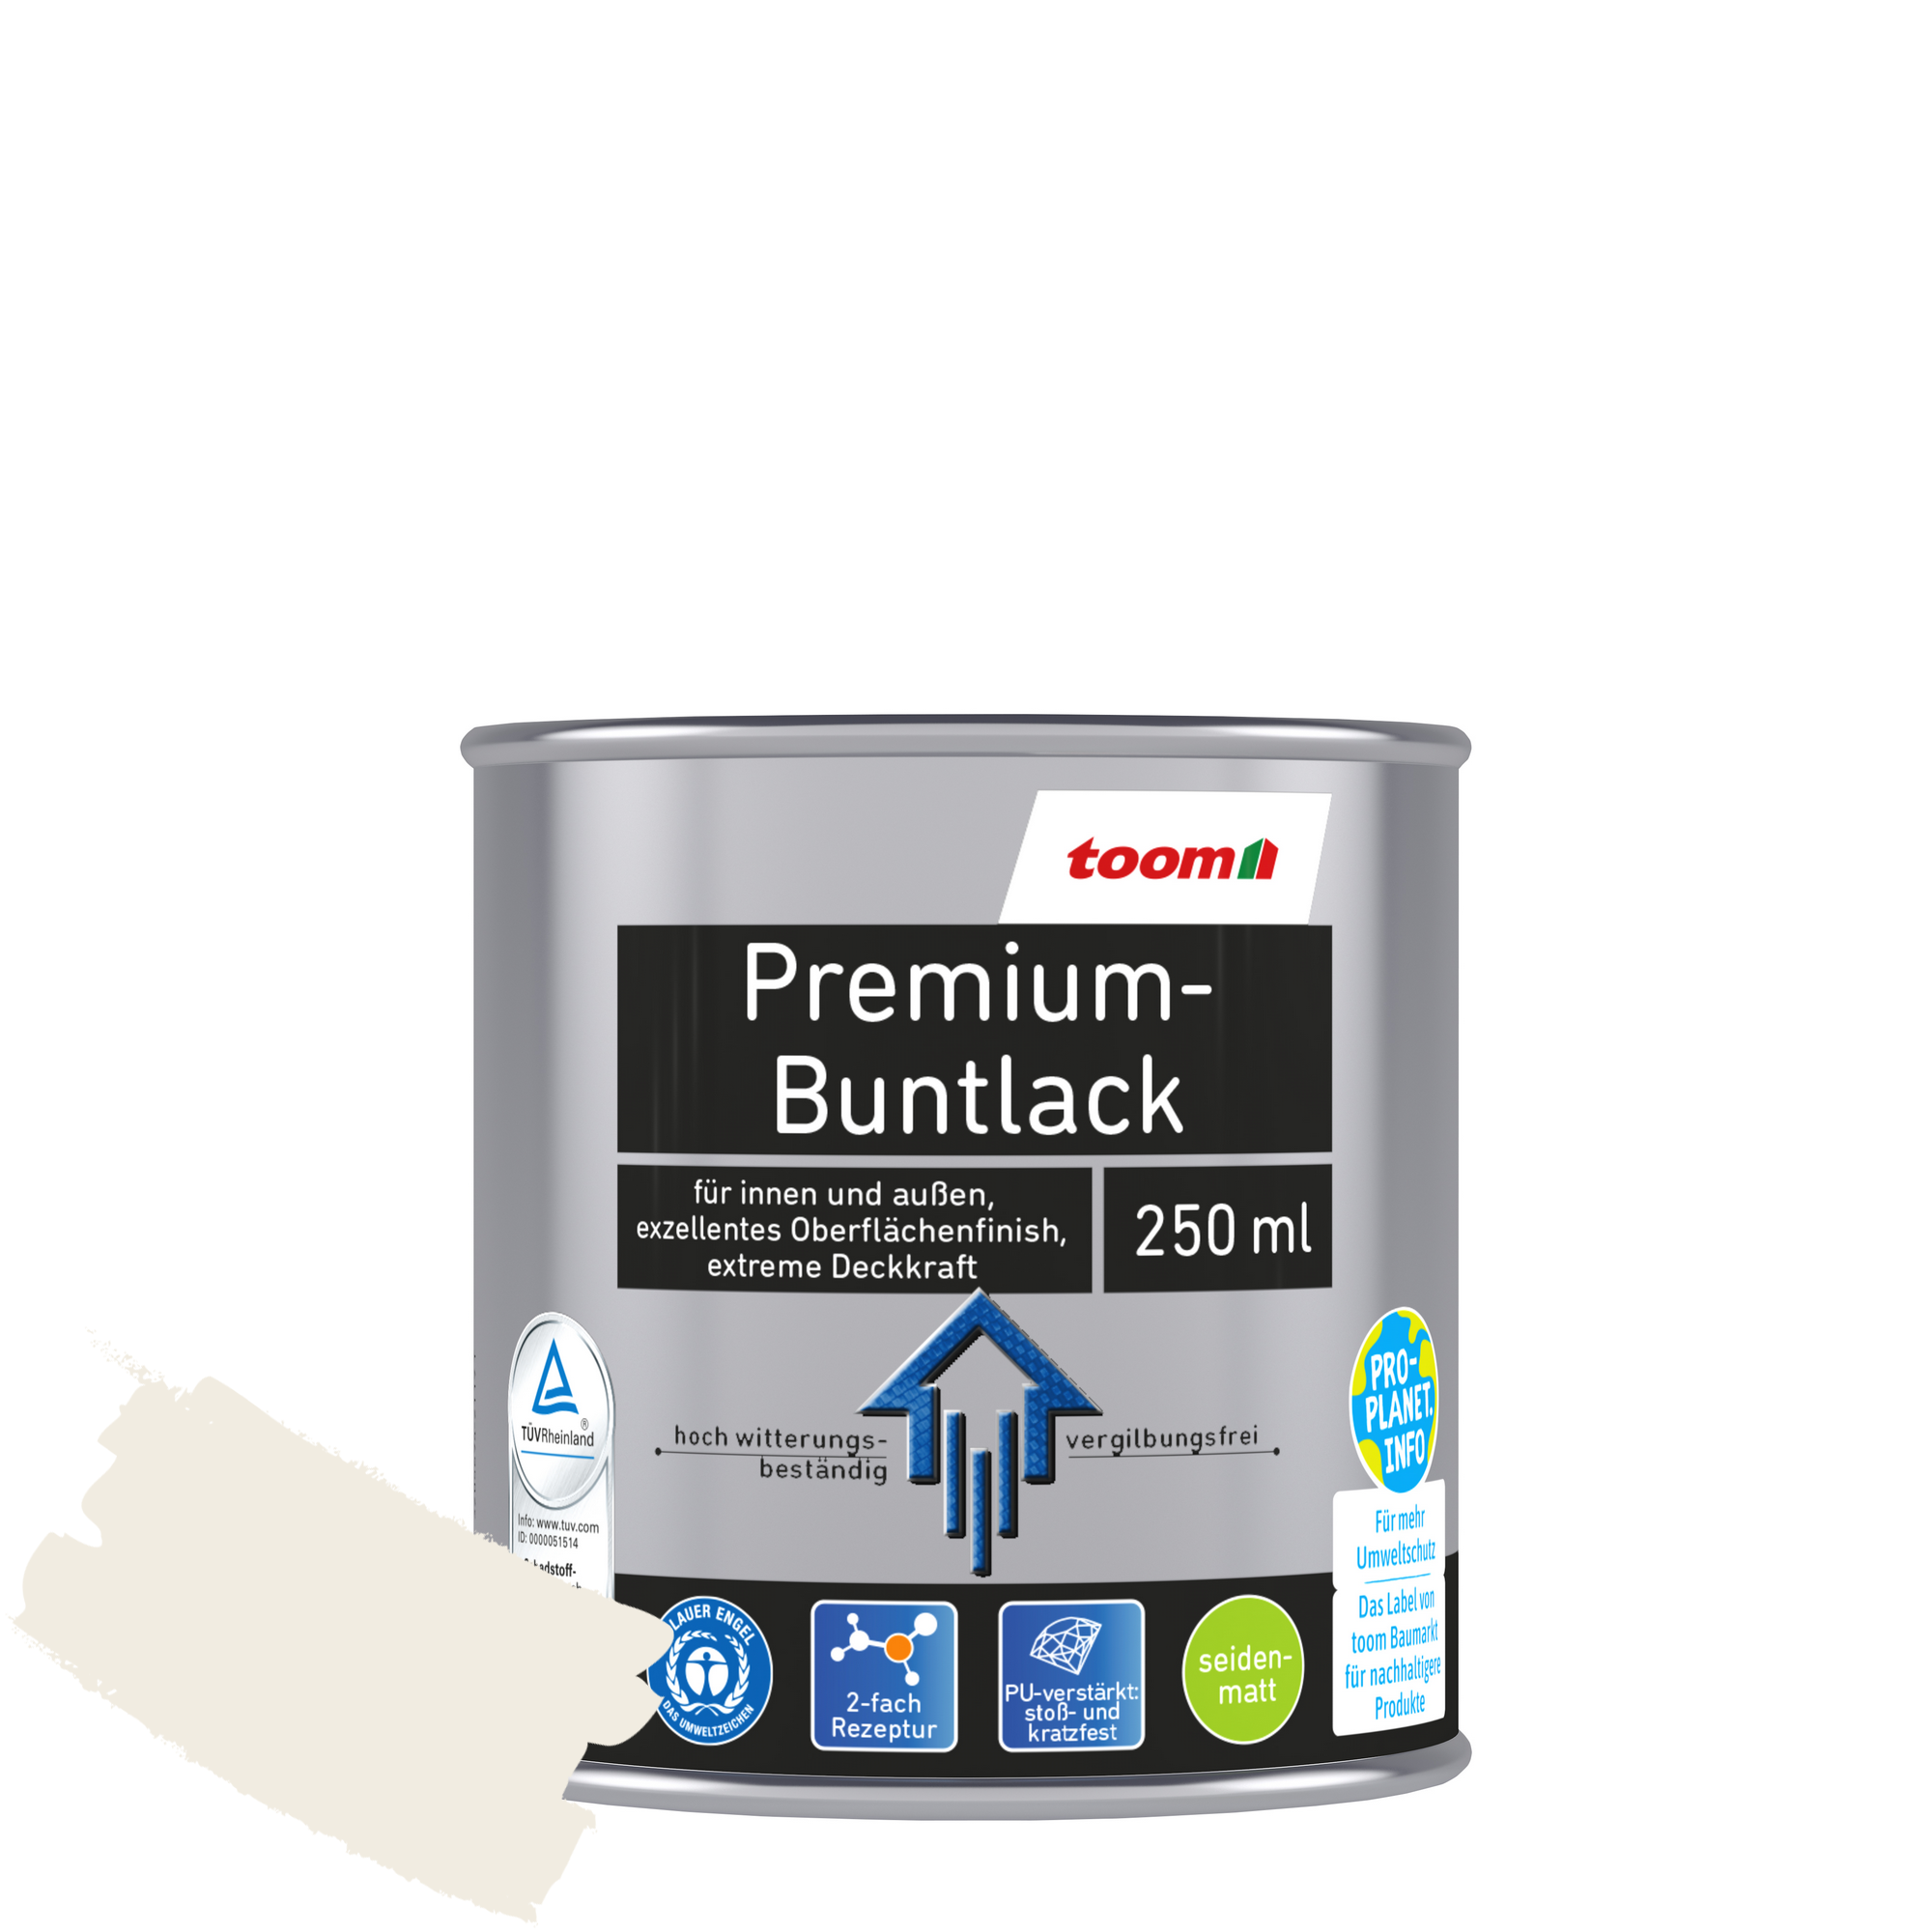 Premium-Buntlack 'Bergkristall' cremeweiß seidenmatt 250 ml + product picture